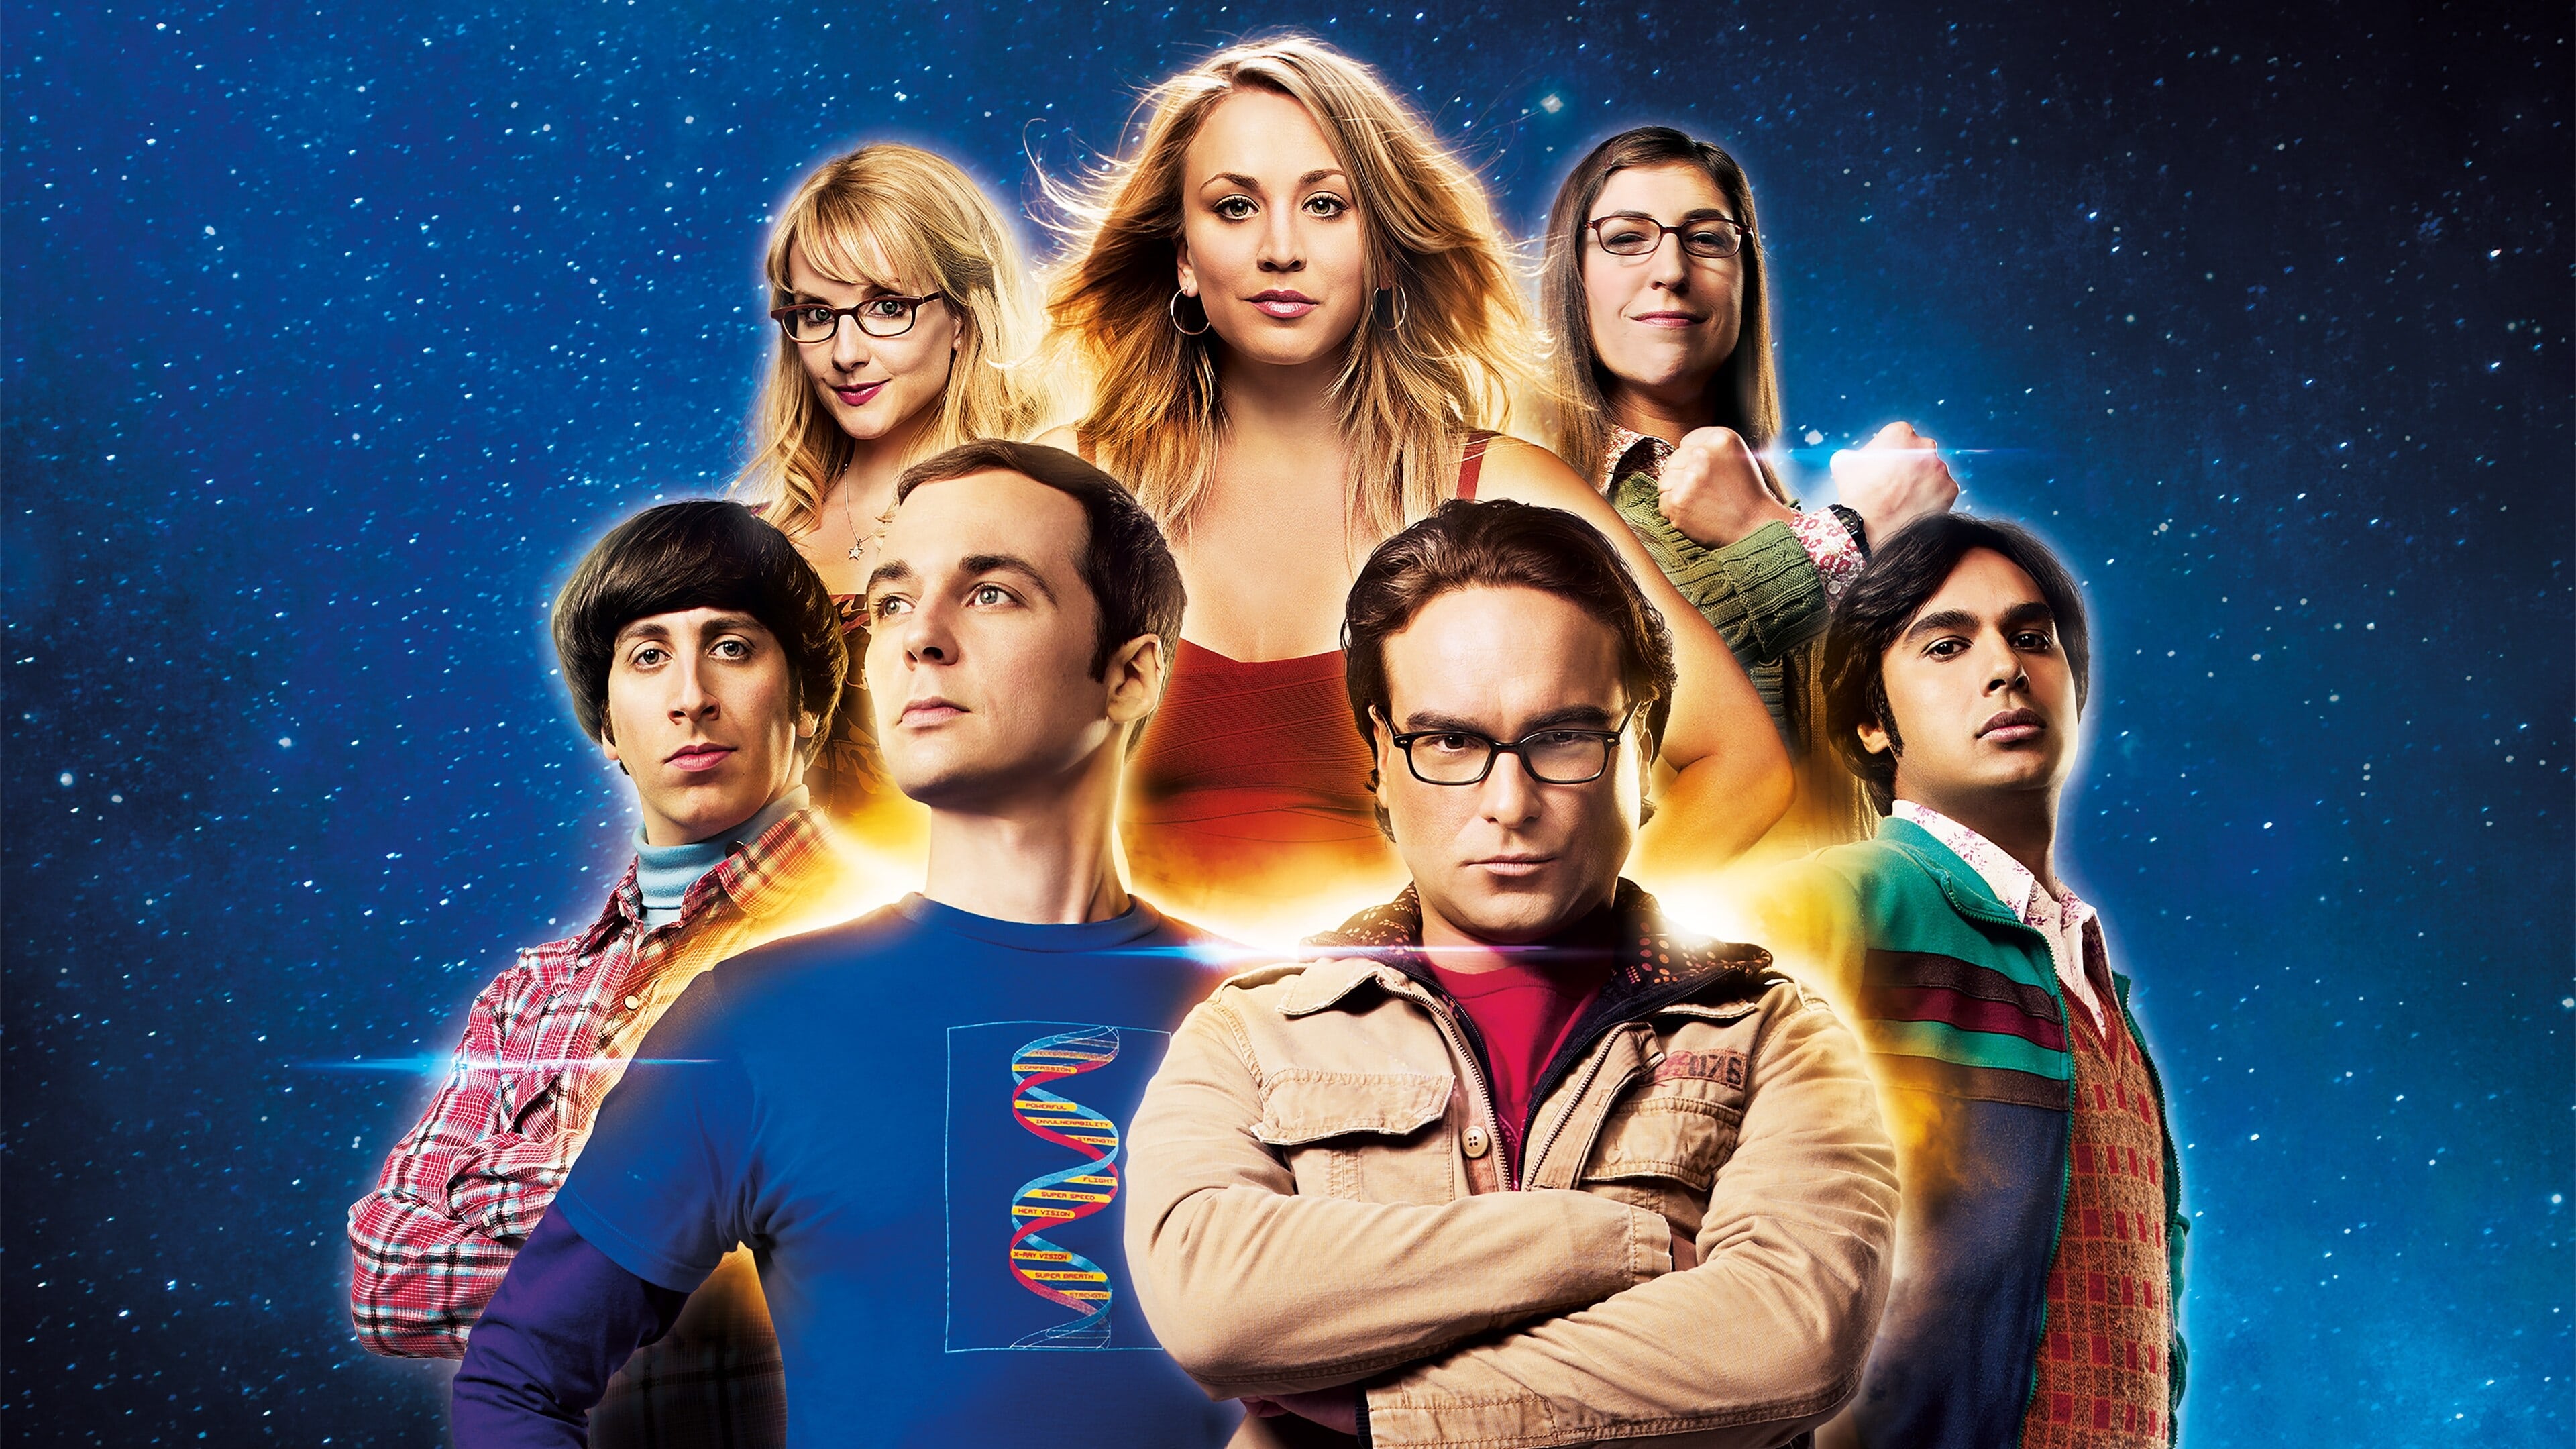 The Big Bang Theory Season 10 (2016) ทฤษฎีวุ่นหัวใจ